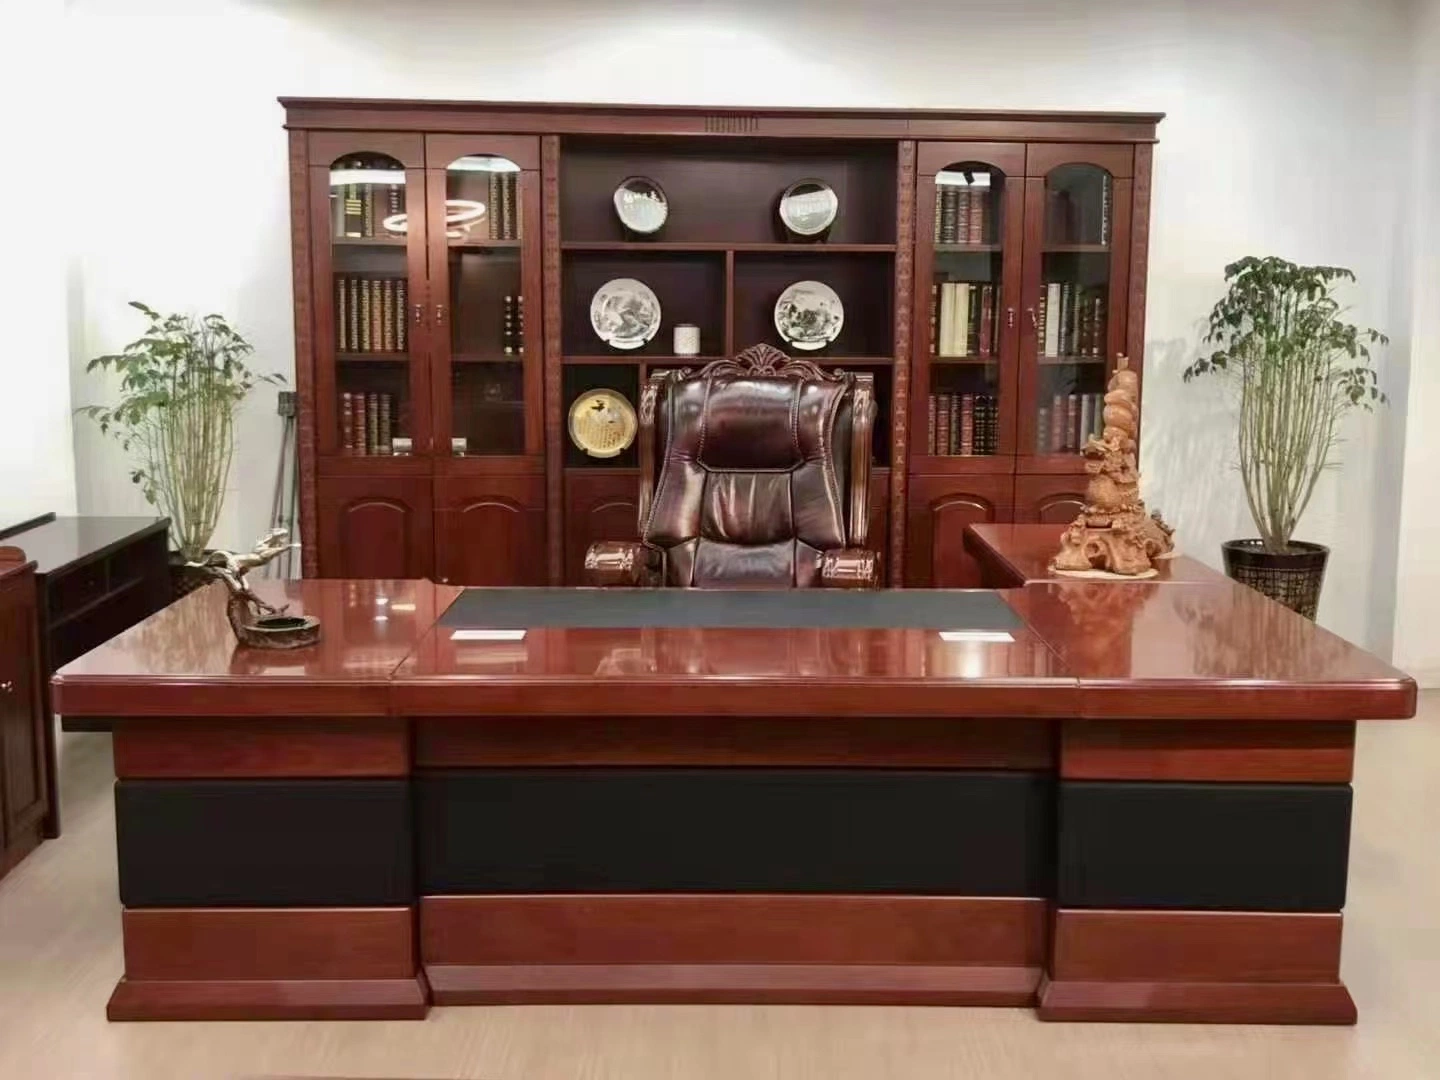 Office Furniture Factory Luxury Office Desk MDF Boss Executive Desk